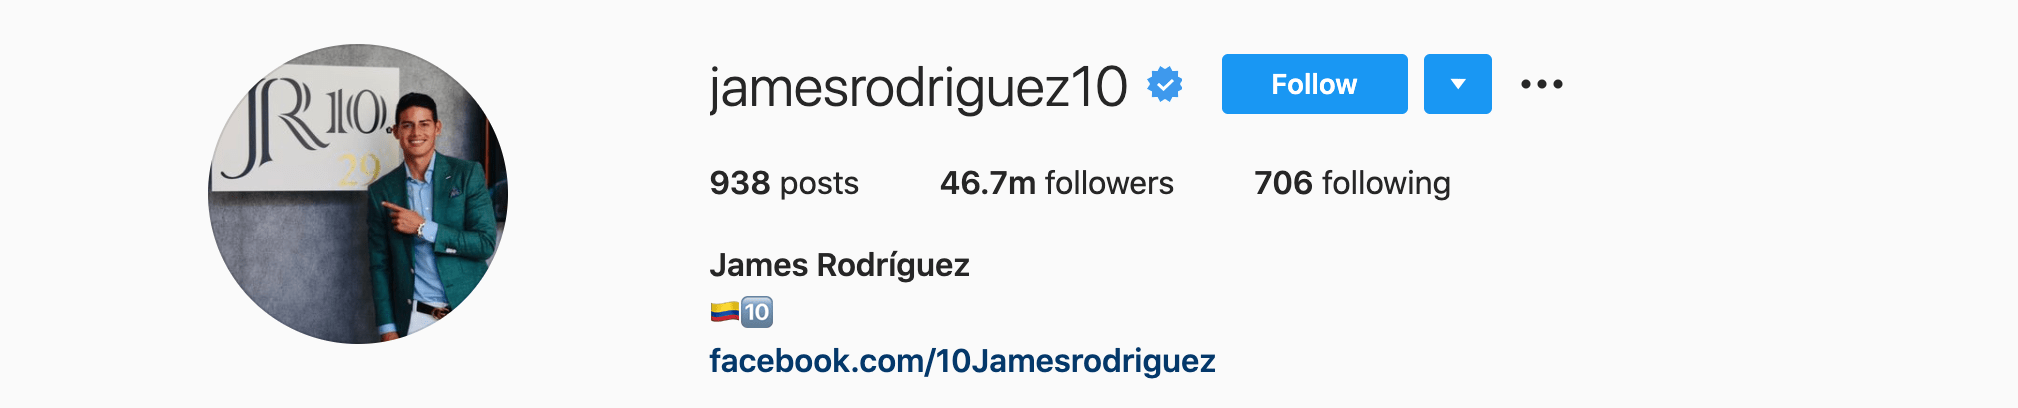 Top Instagram Influencers - JAMES RODRÍGUEZ